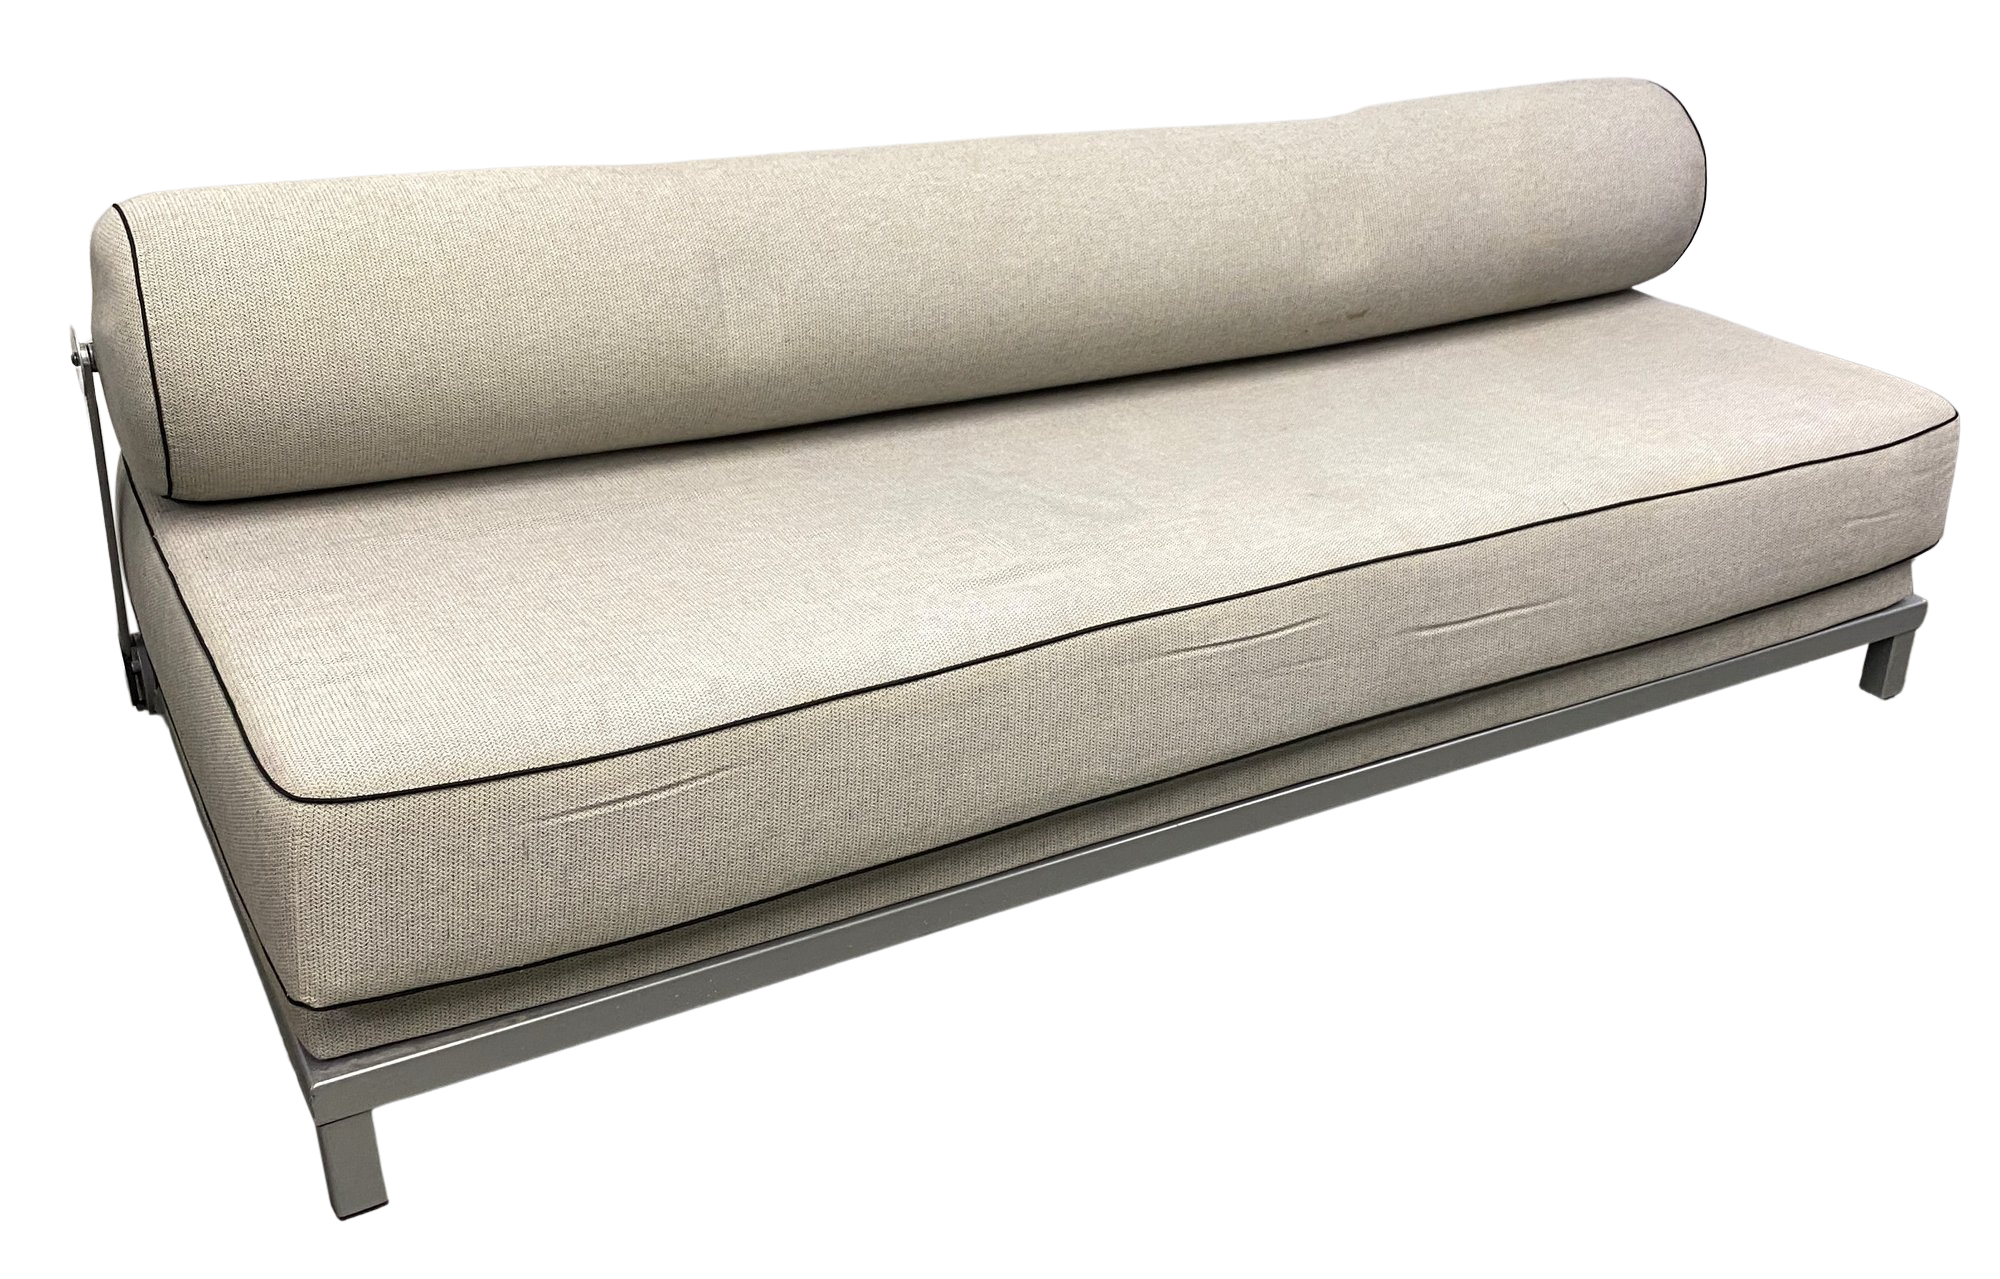 Soft Line Twilight Sleeper Sofa Made